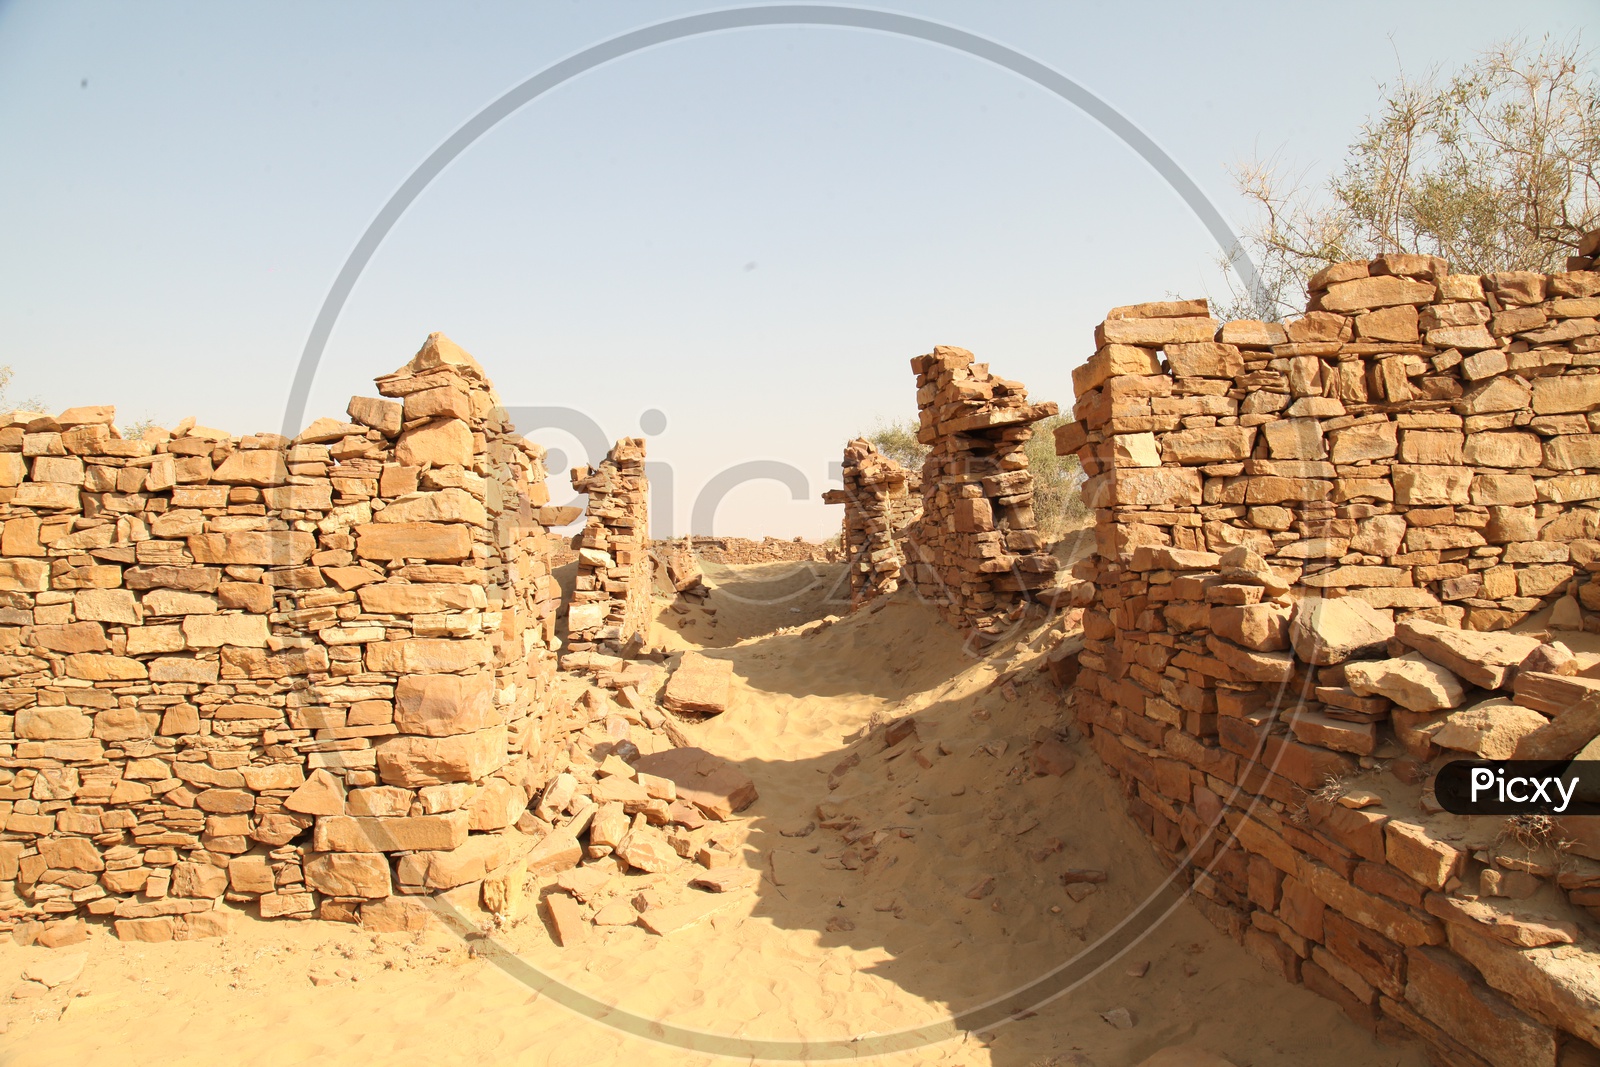 Ancient ruins in a desert